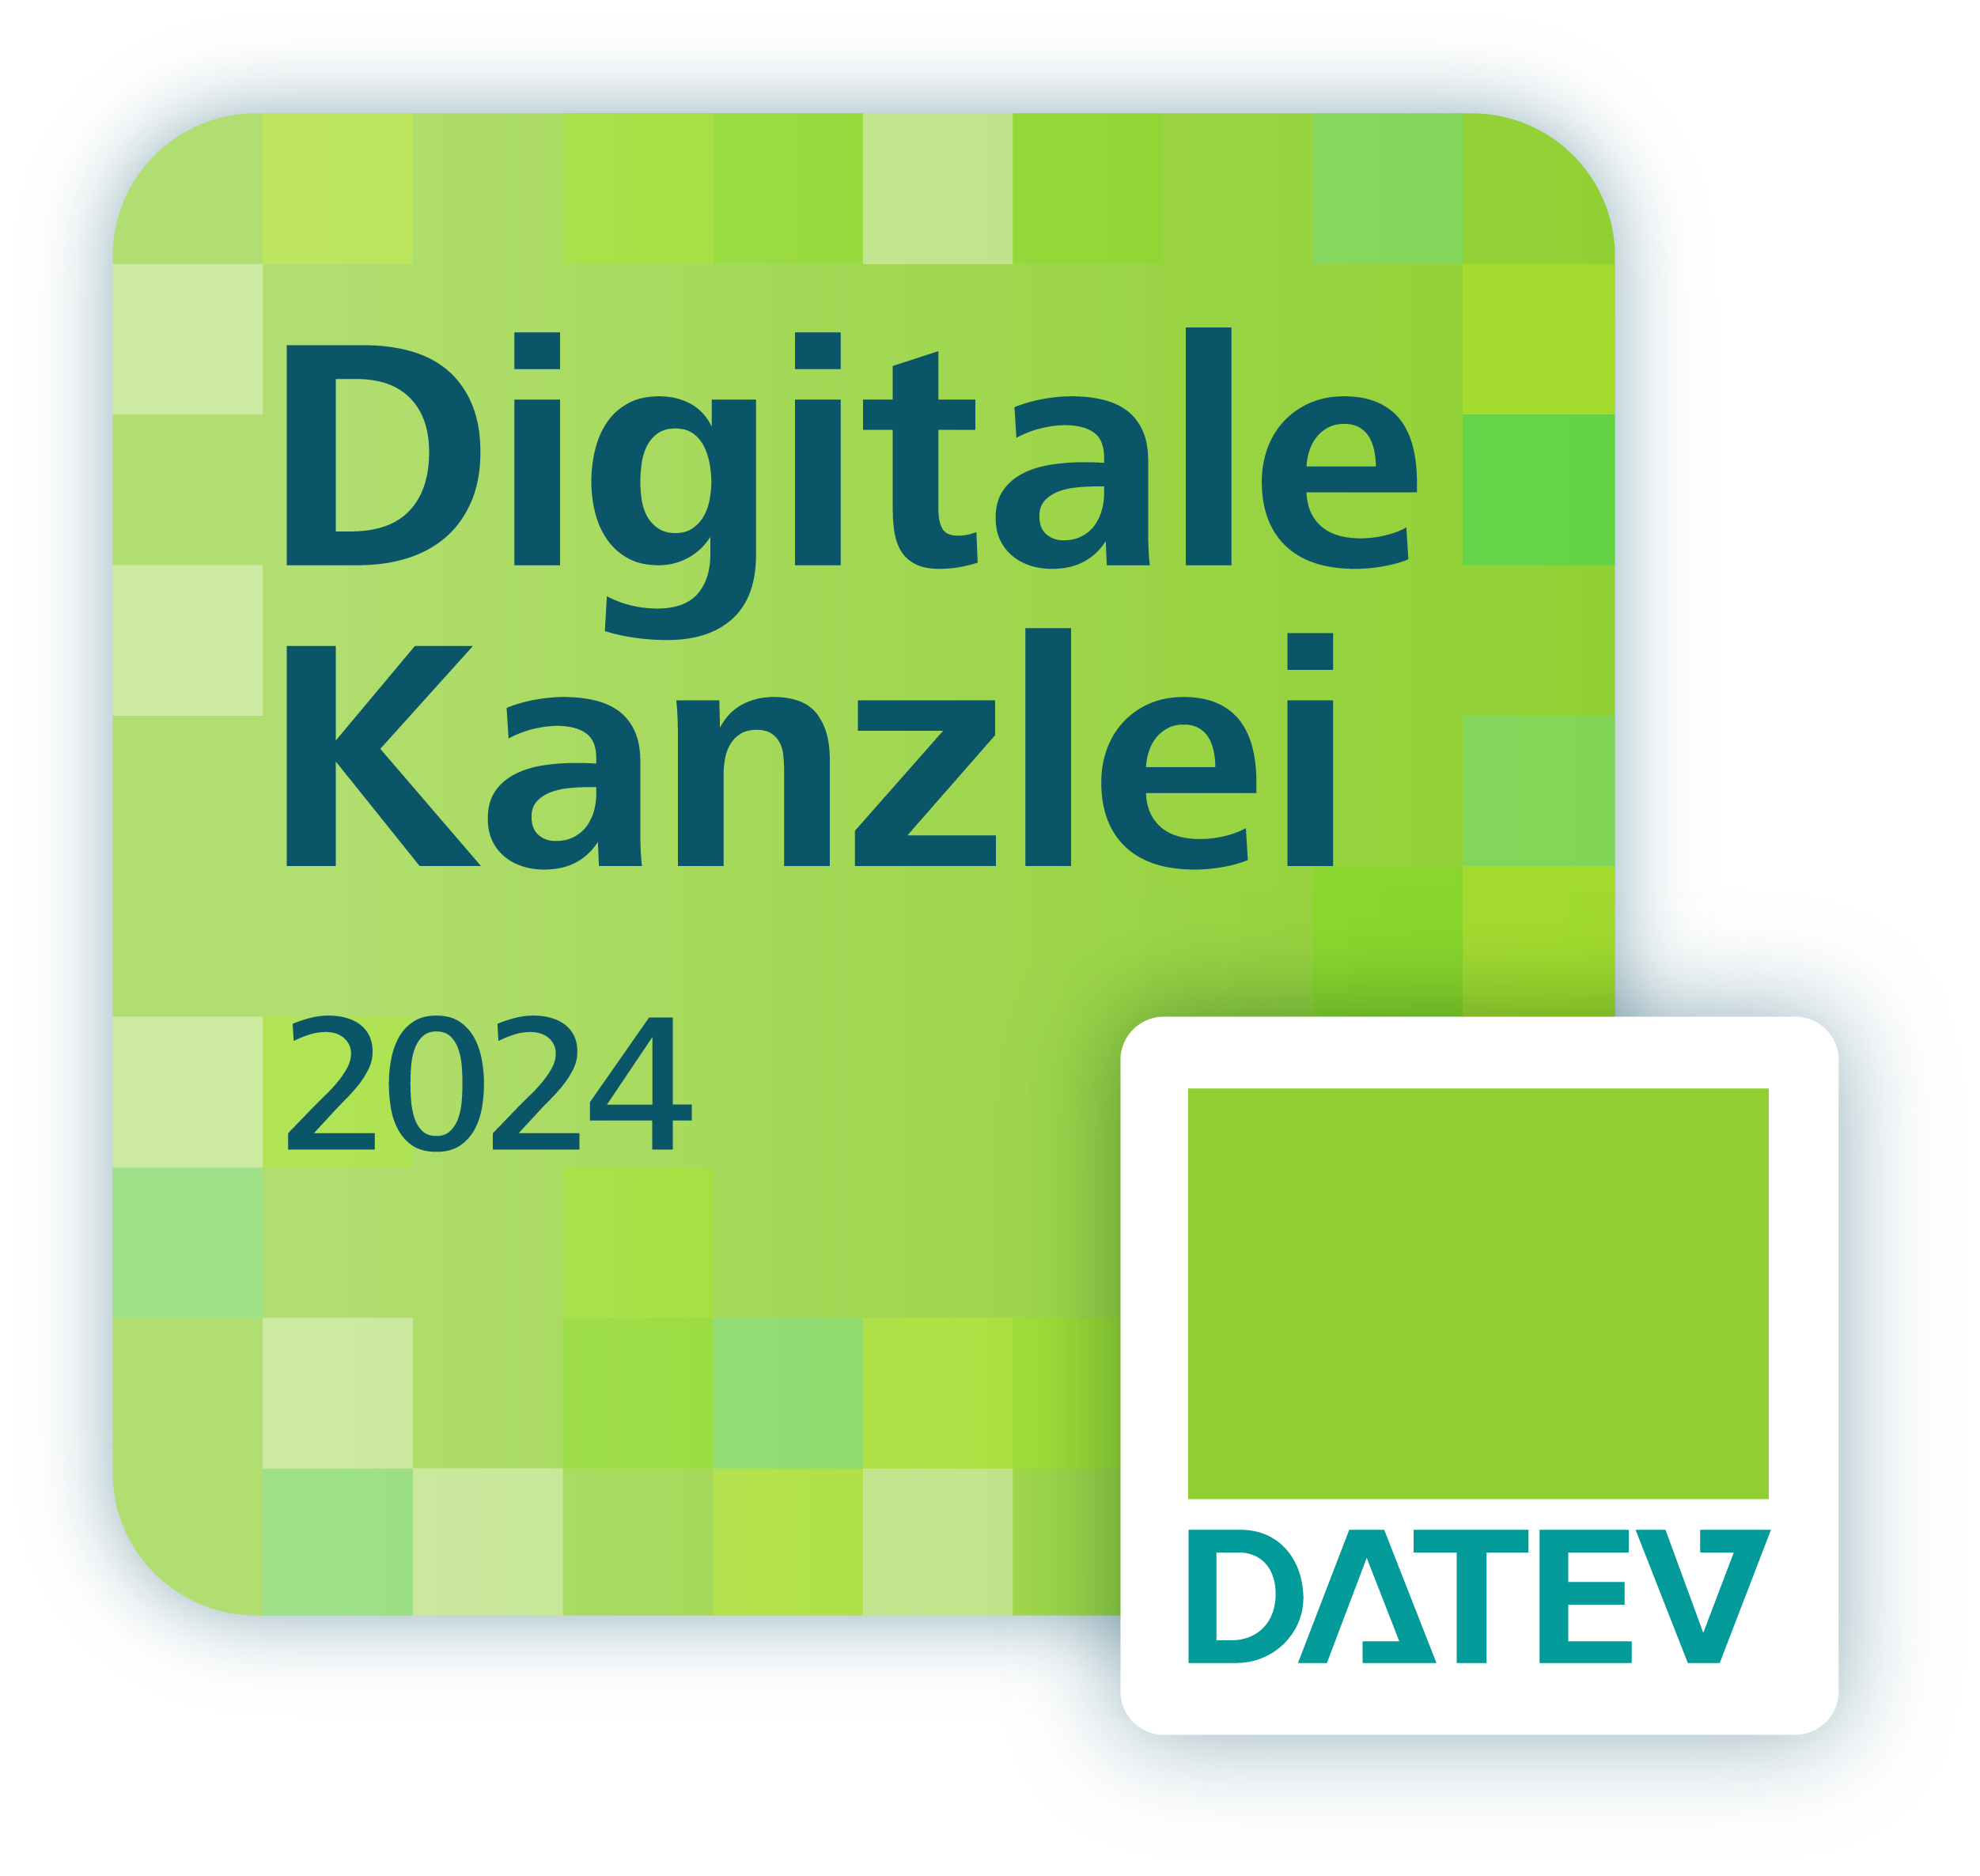 DATEV_Label_Digitale_Kanzlei_2024_RGB